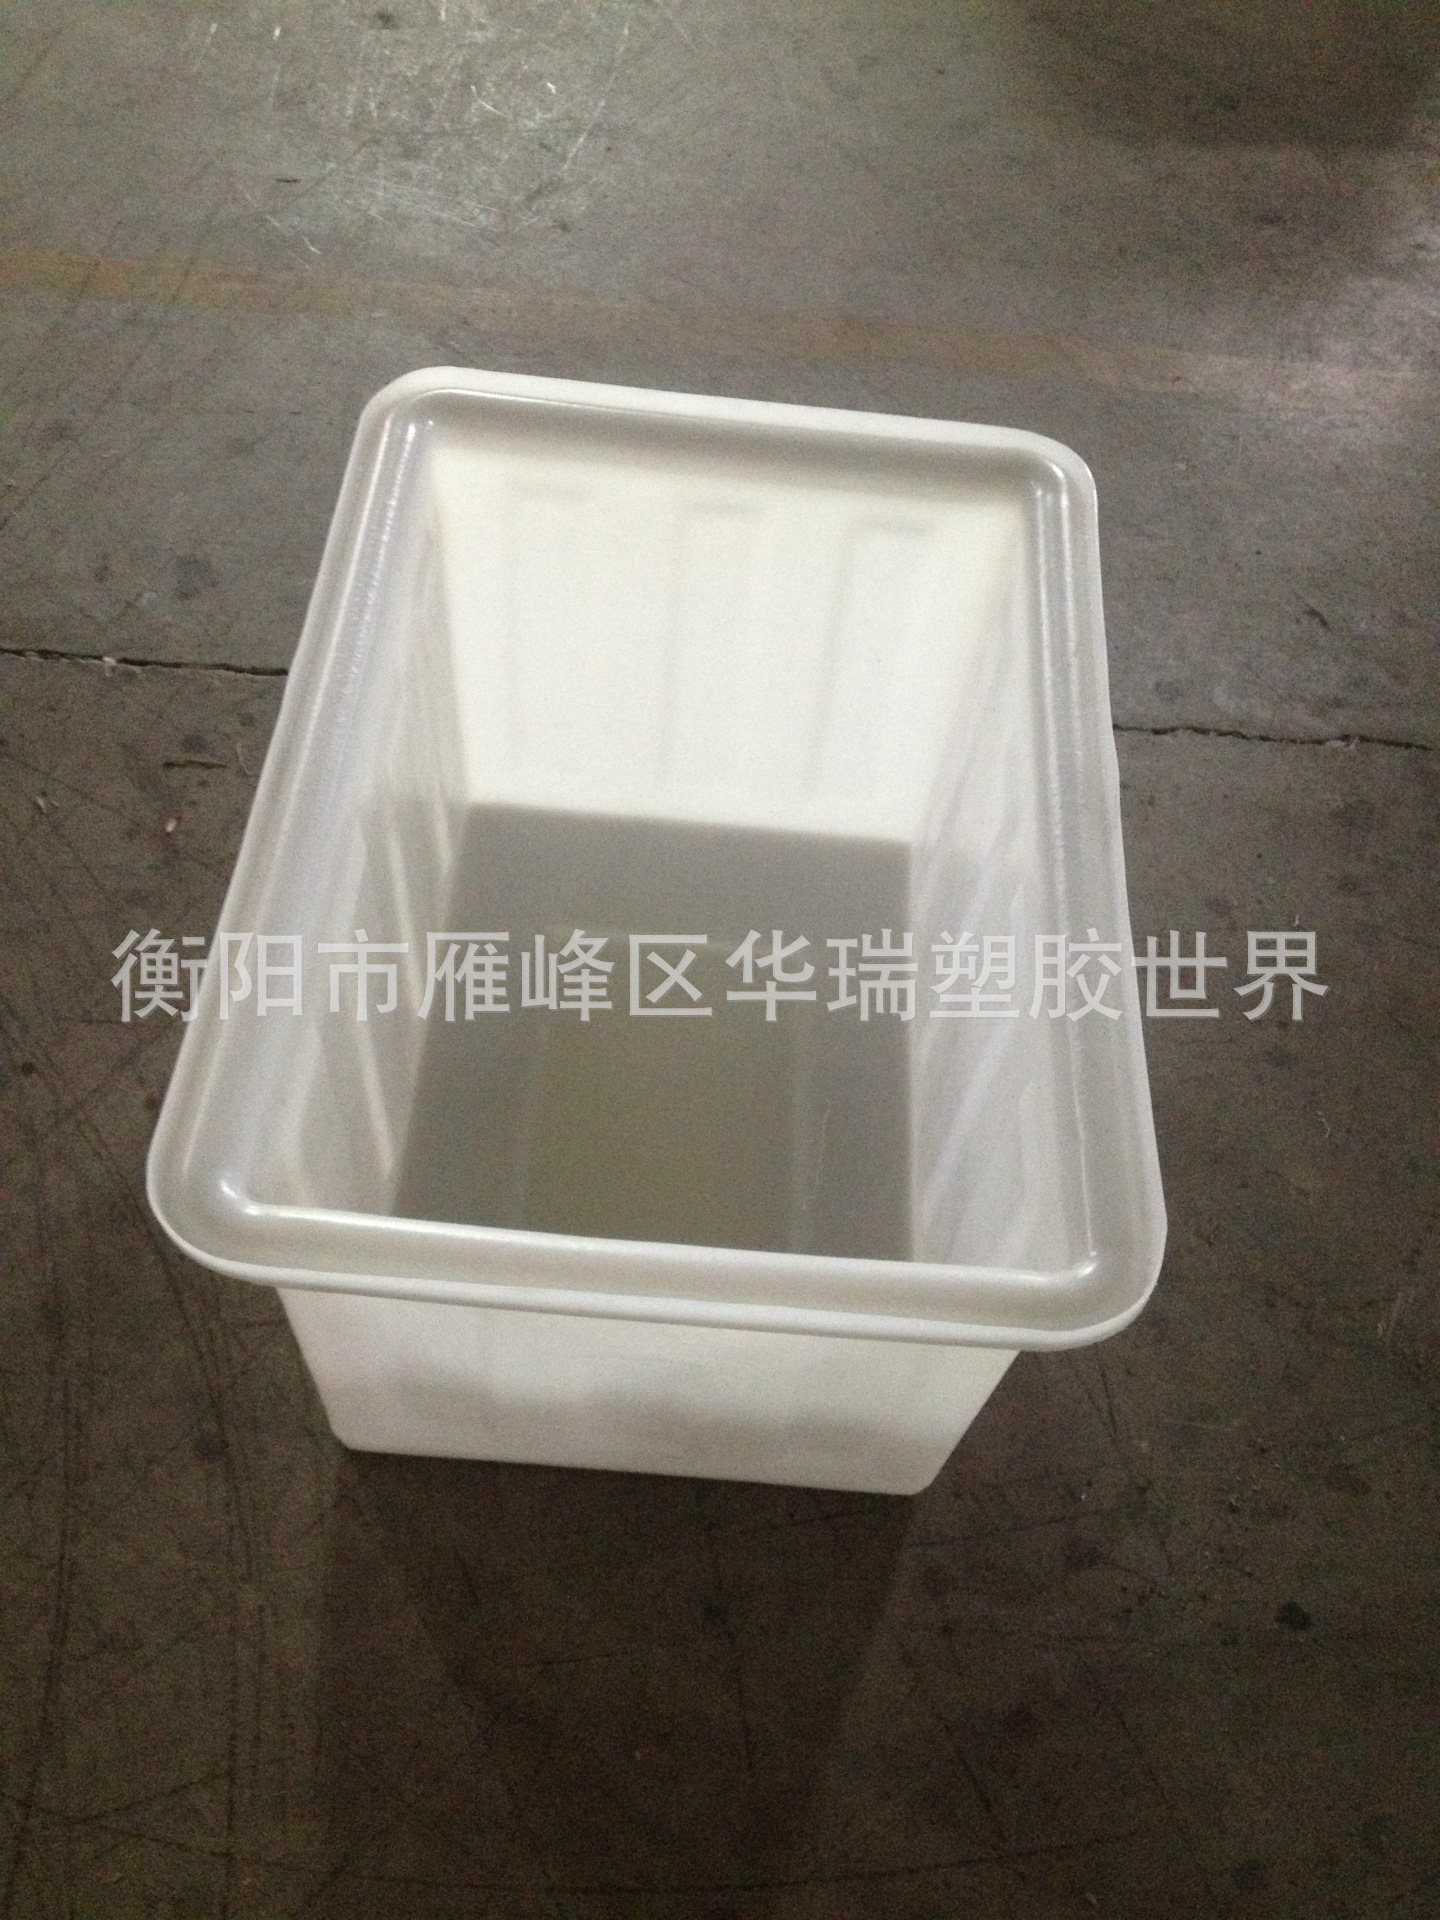 Hunan Manufactor Since sales 90 rise 200 rise 500 Rise 850 Lift plastic bucket 1700 Plastic Square box water tank